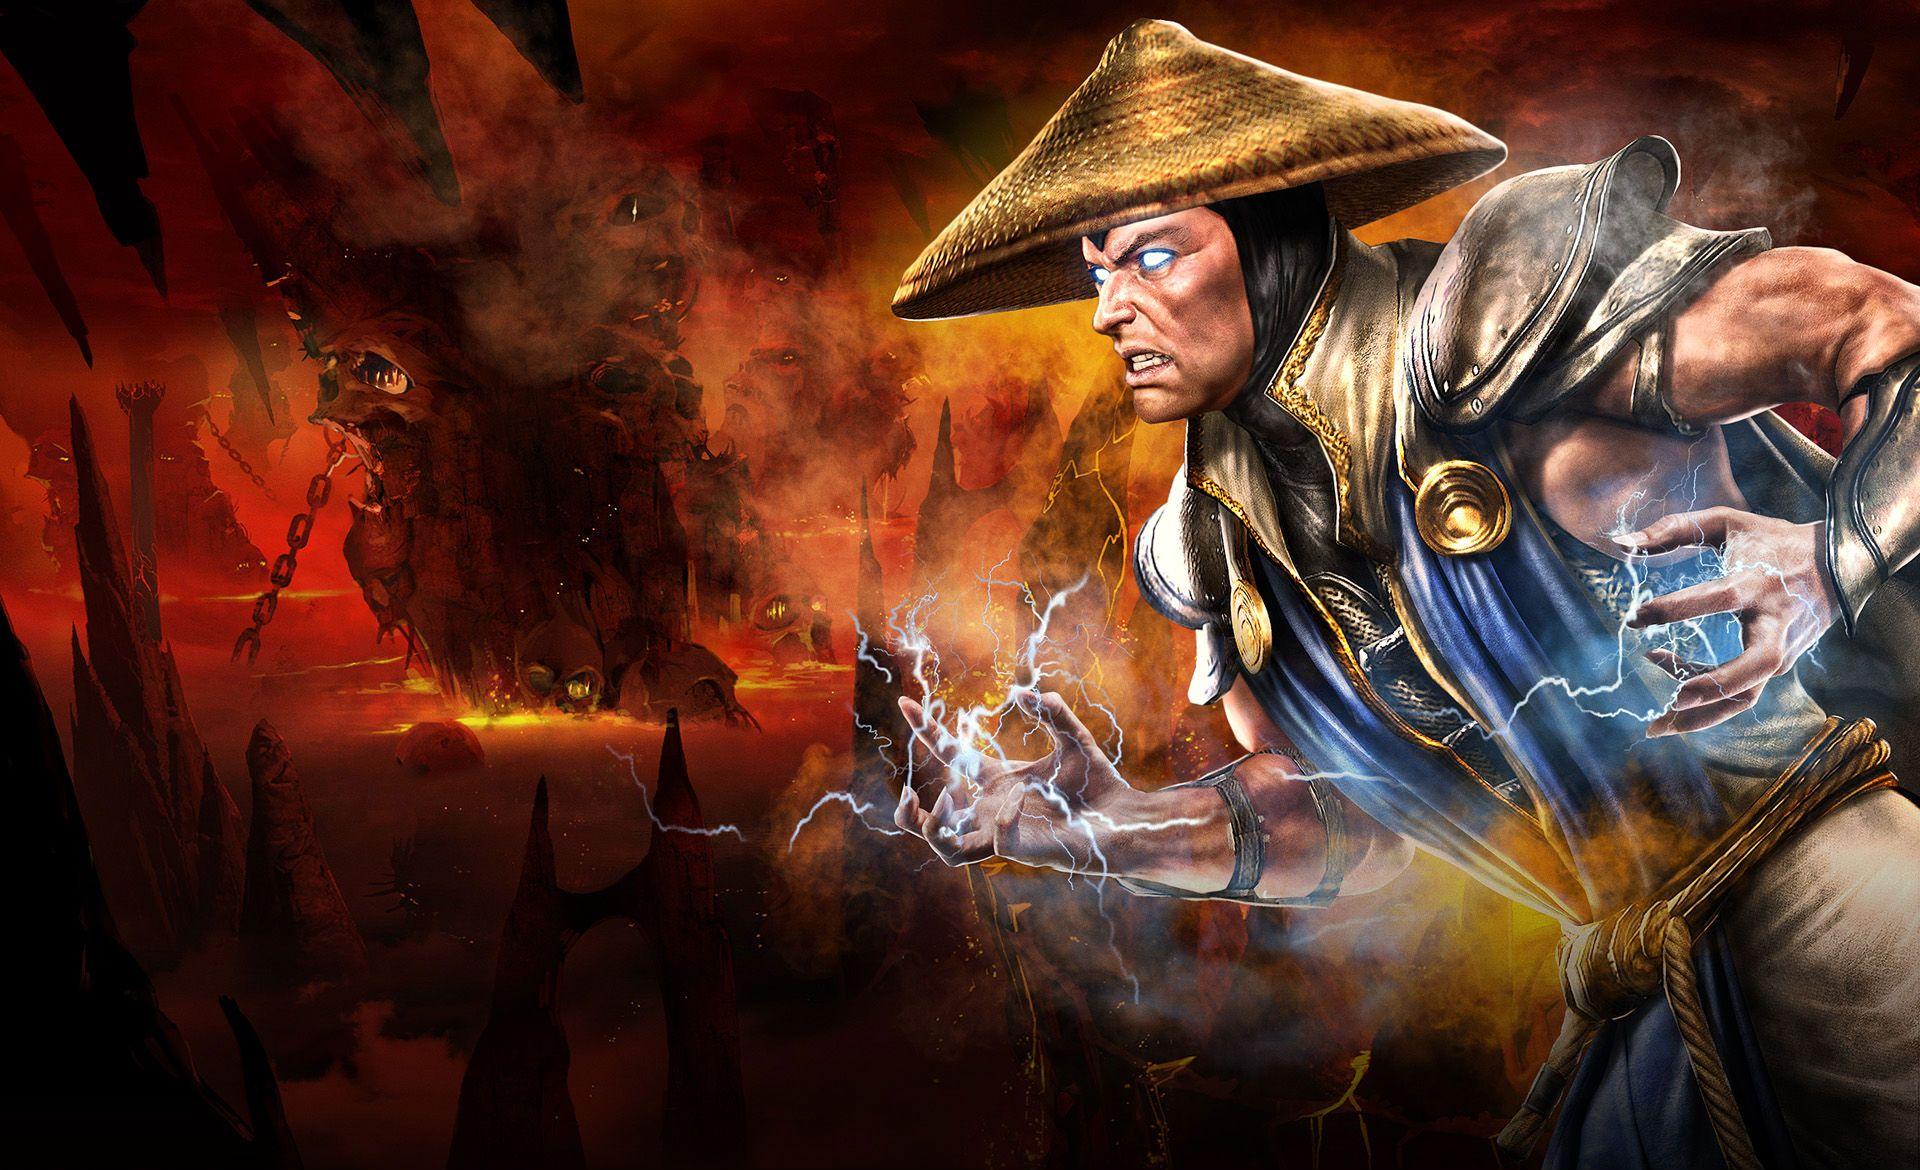 Mortal Kombat Vs DC Univers HD Wallpaper, Background Image